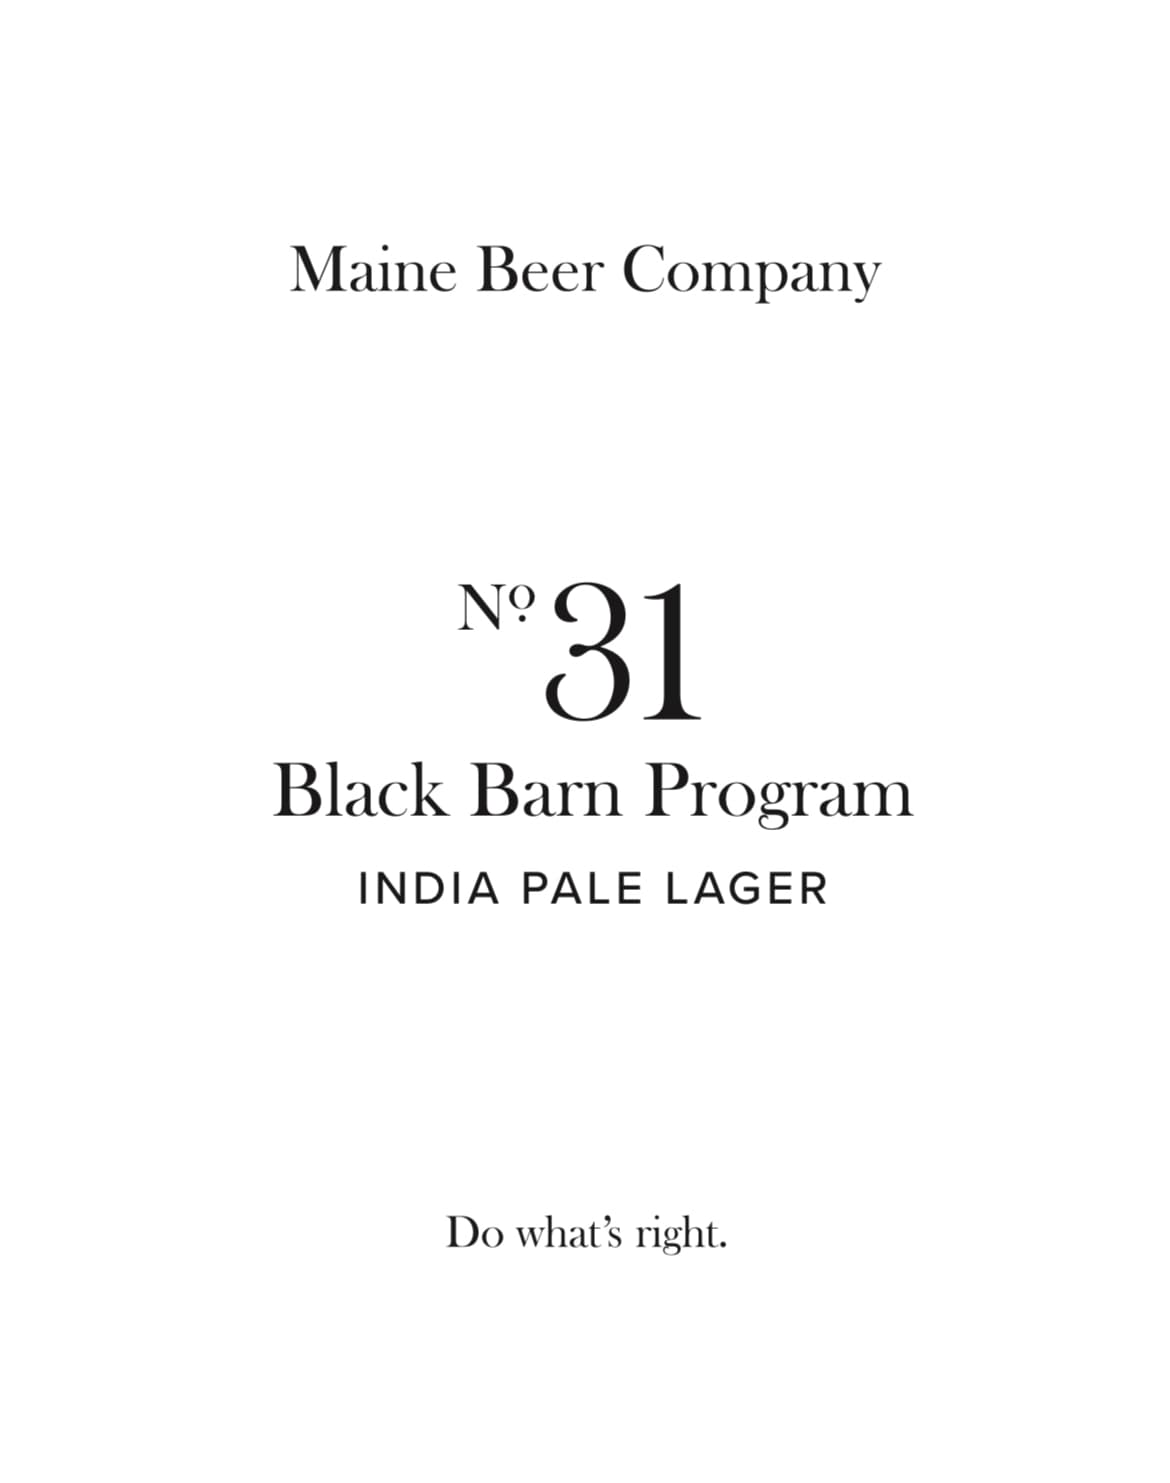 Black Barn Program No. 31 India Pale Lager